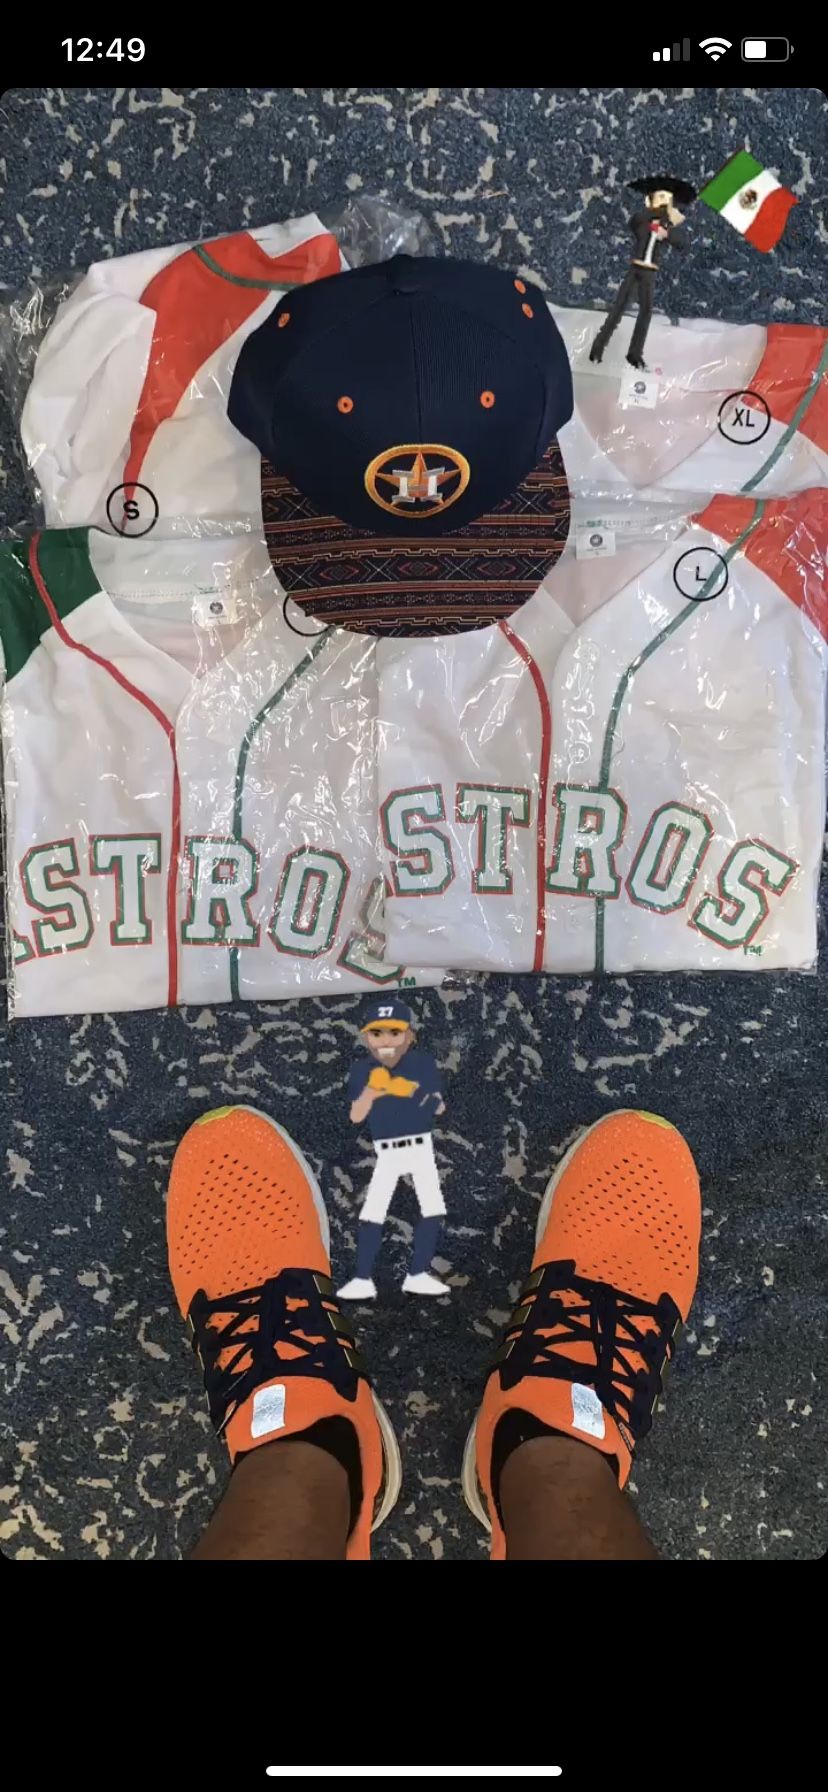 Men's Houston Astros “Los Astros” Hispanic Heritage Jersey 60th An